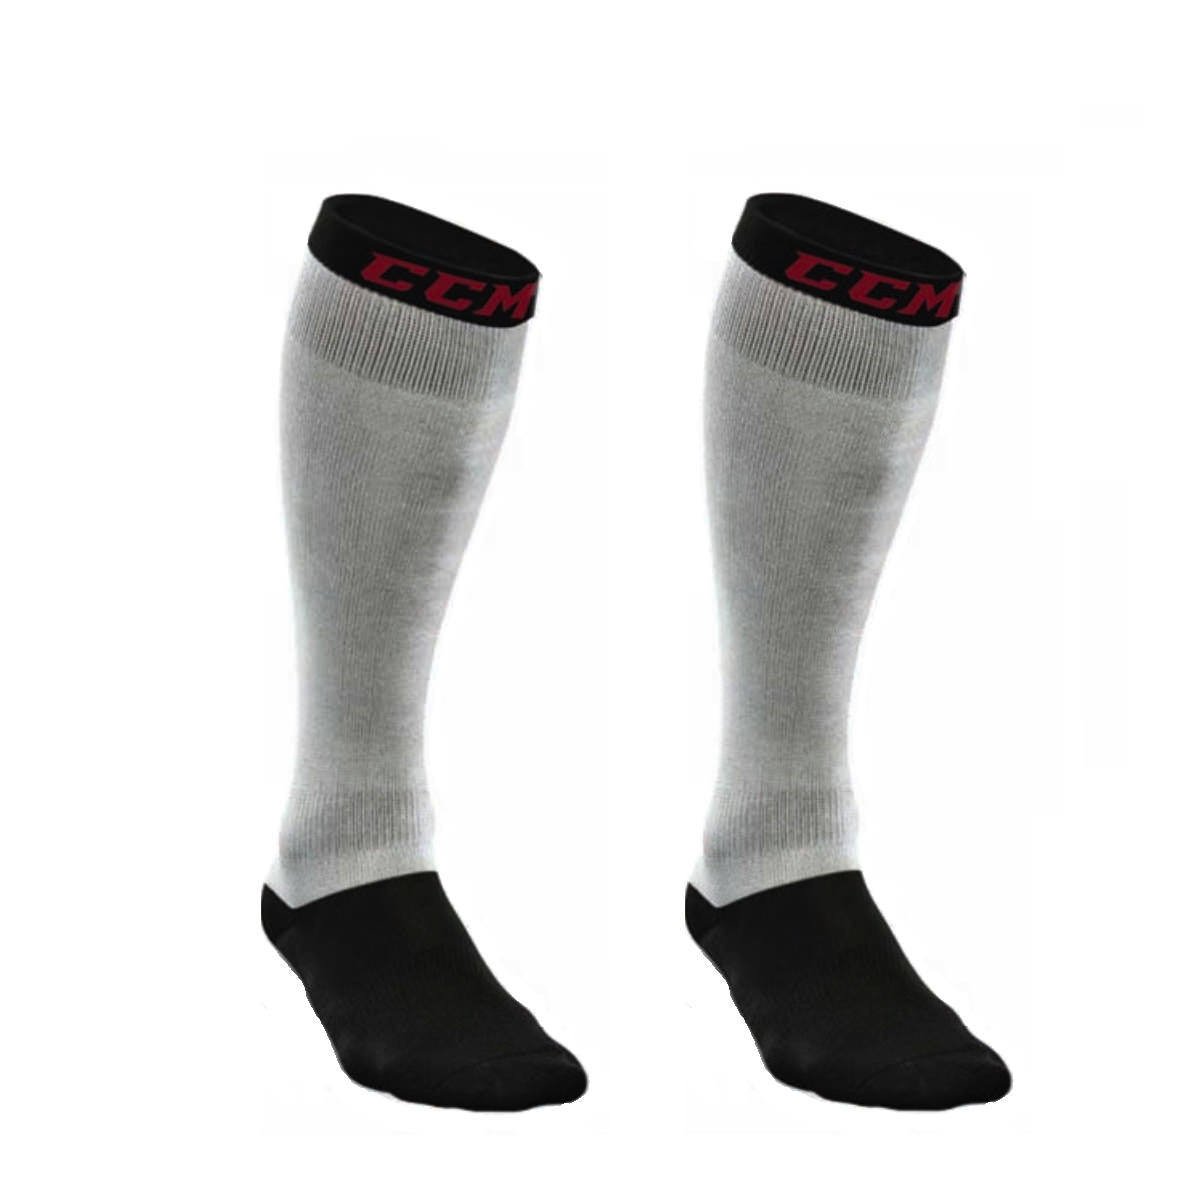 ccm-proline-cut-resistant-hockey-skate-socks